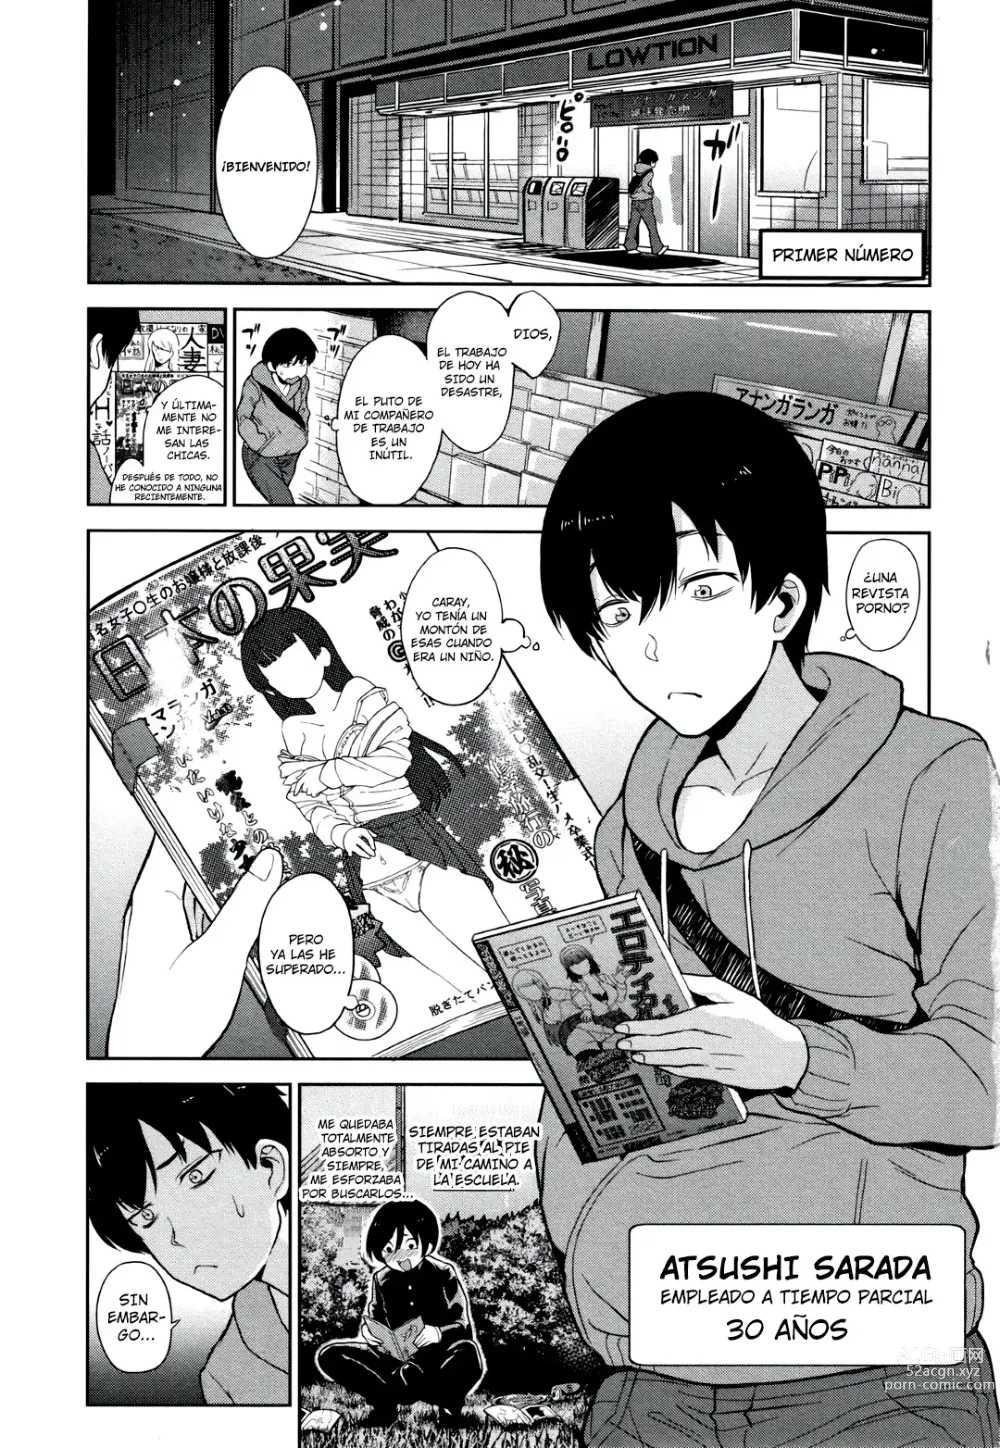 Page 6 of manga Kawaii Onnanoko o Tsuru Houhou - Method to catch a pretty girl